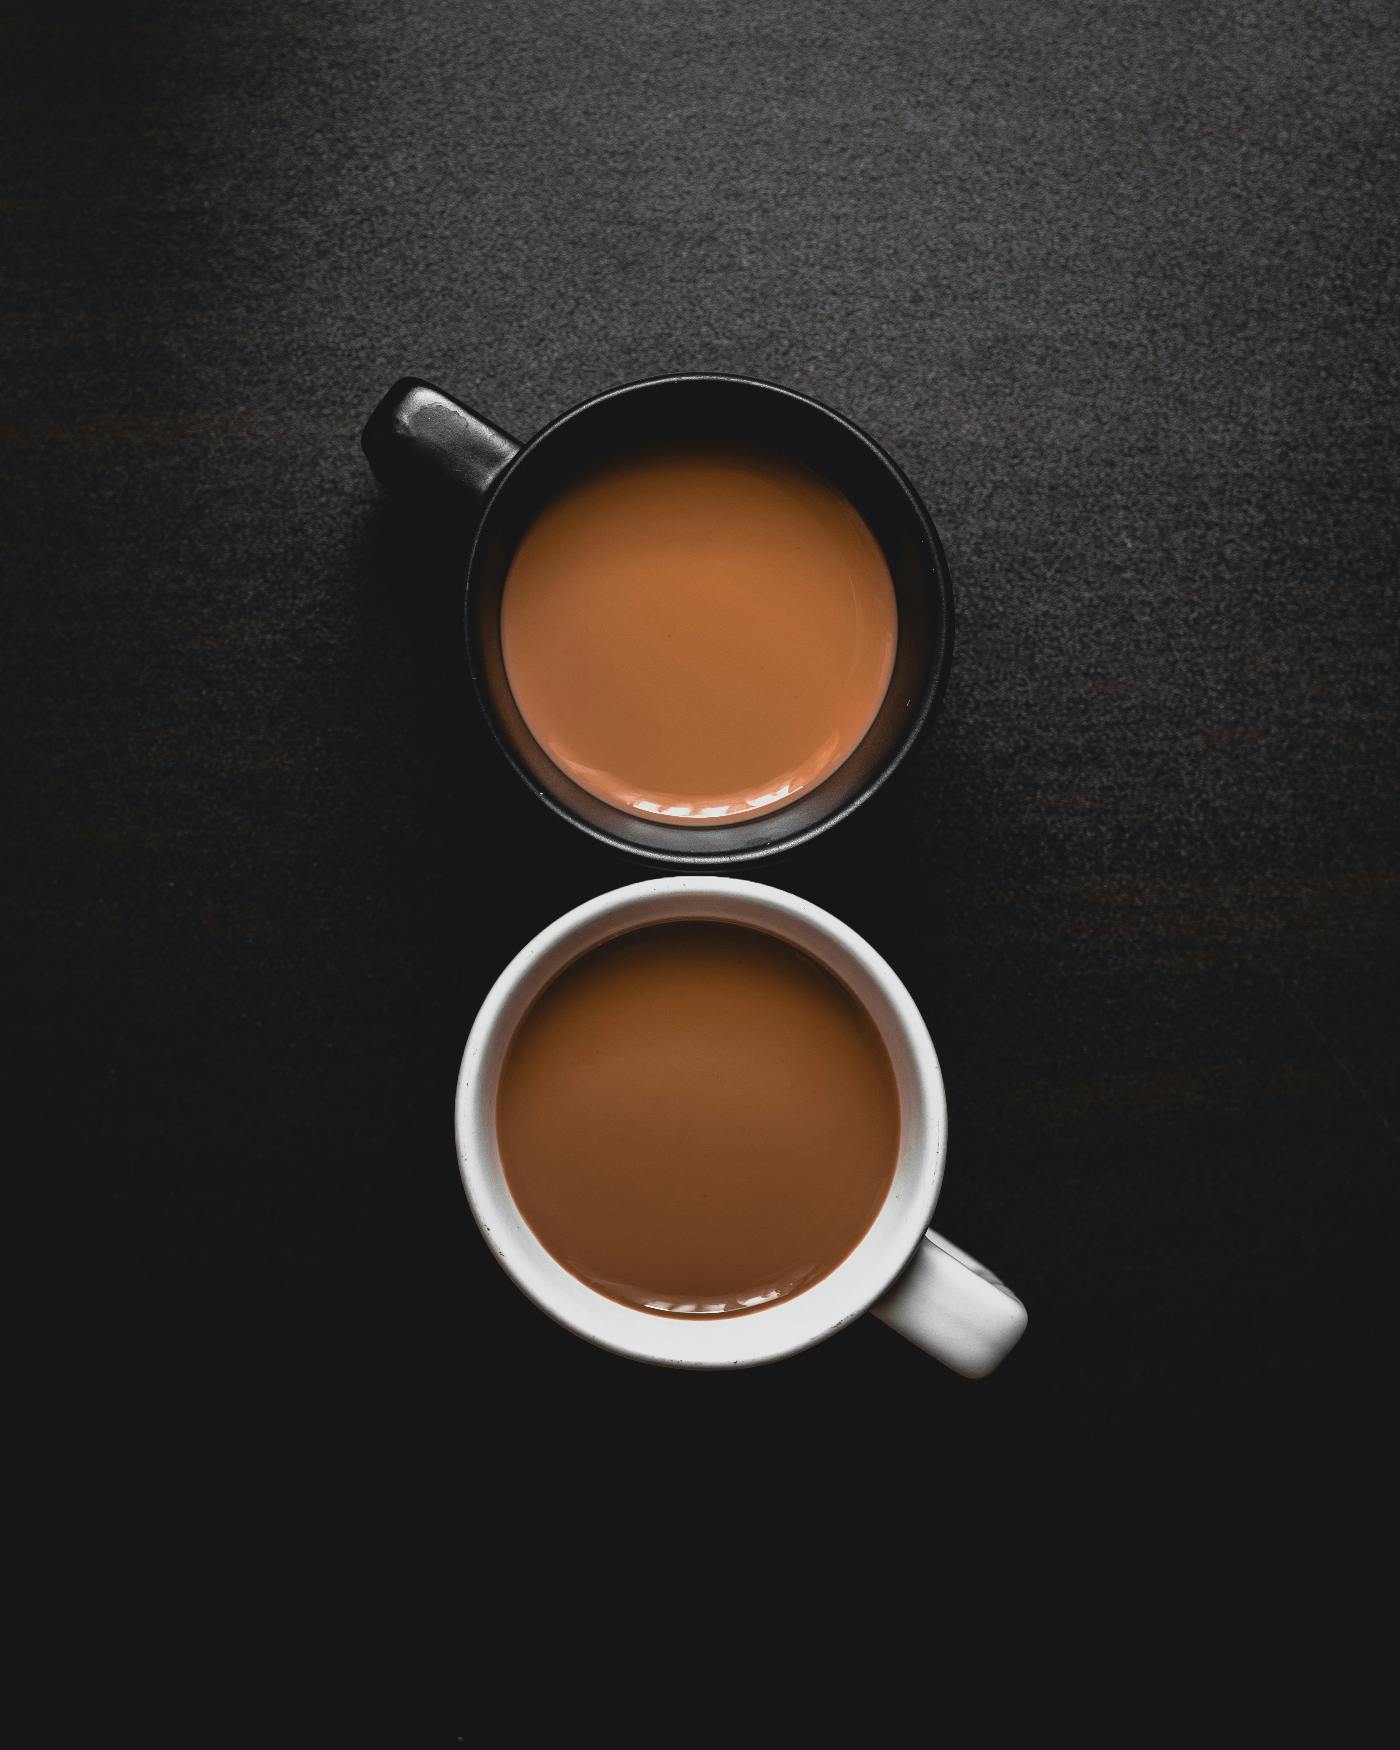 Two cups of coffee, one in a black mug, one in a white mug.